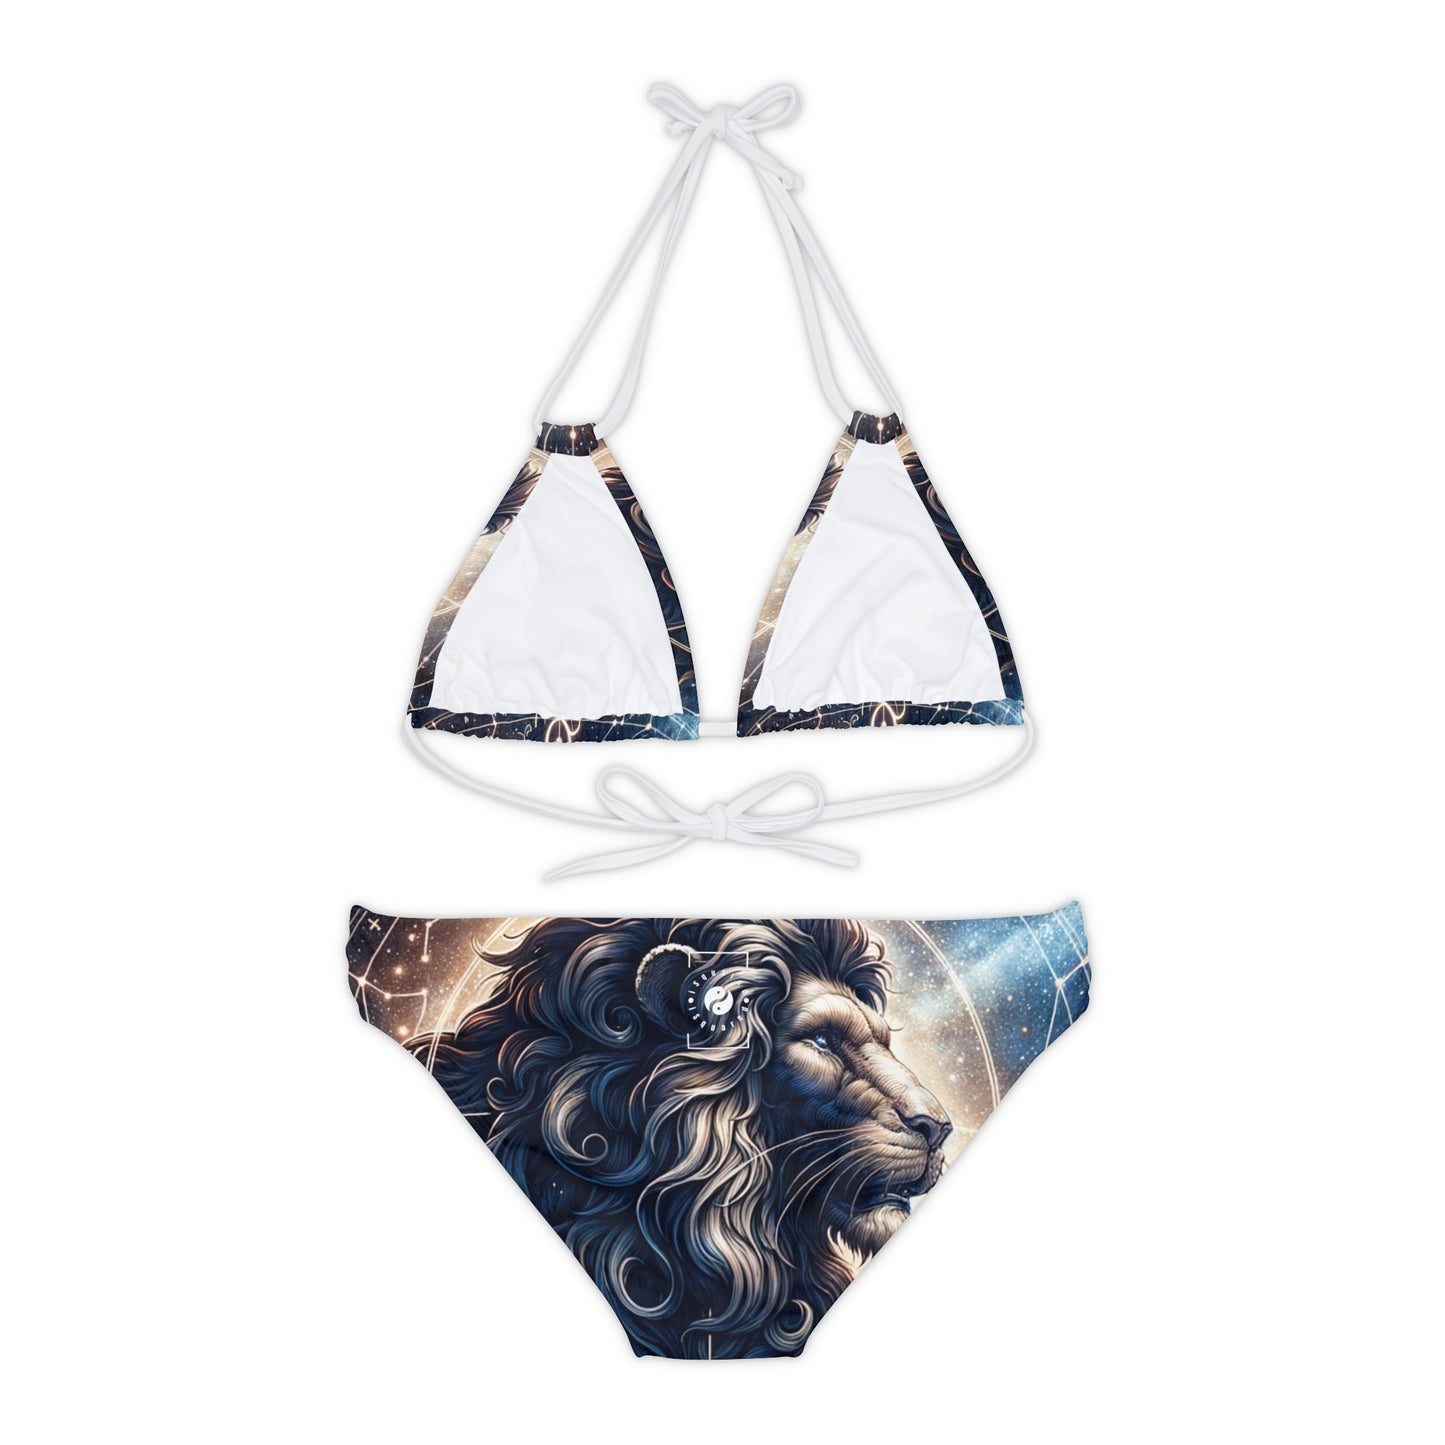 Celestial Leo Roar - Lace-up Bikini Set